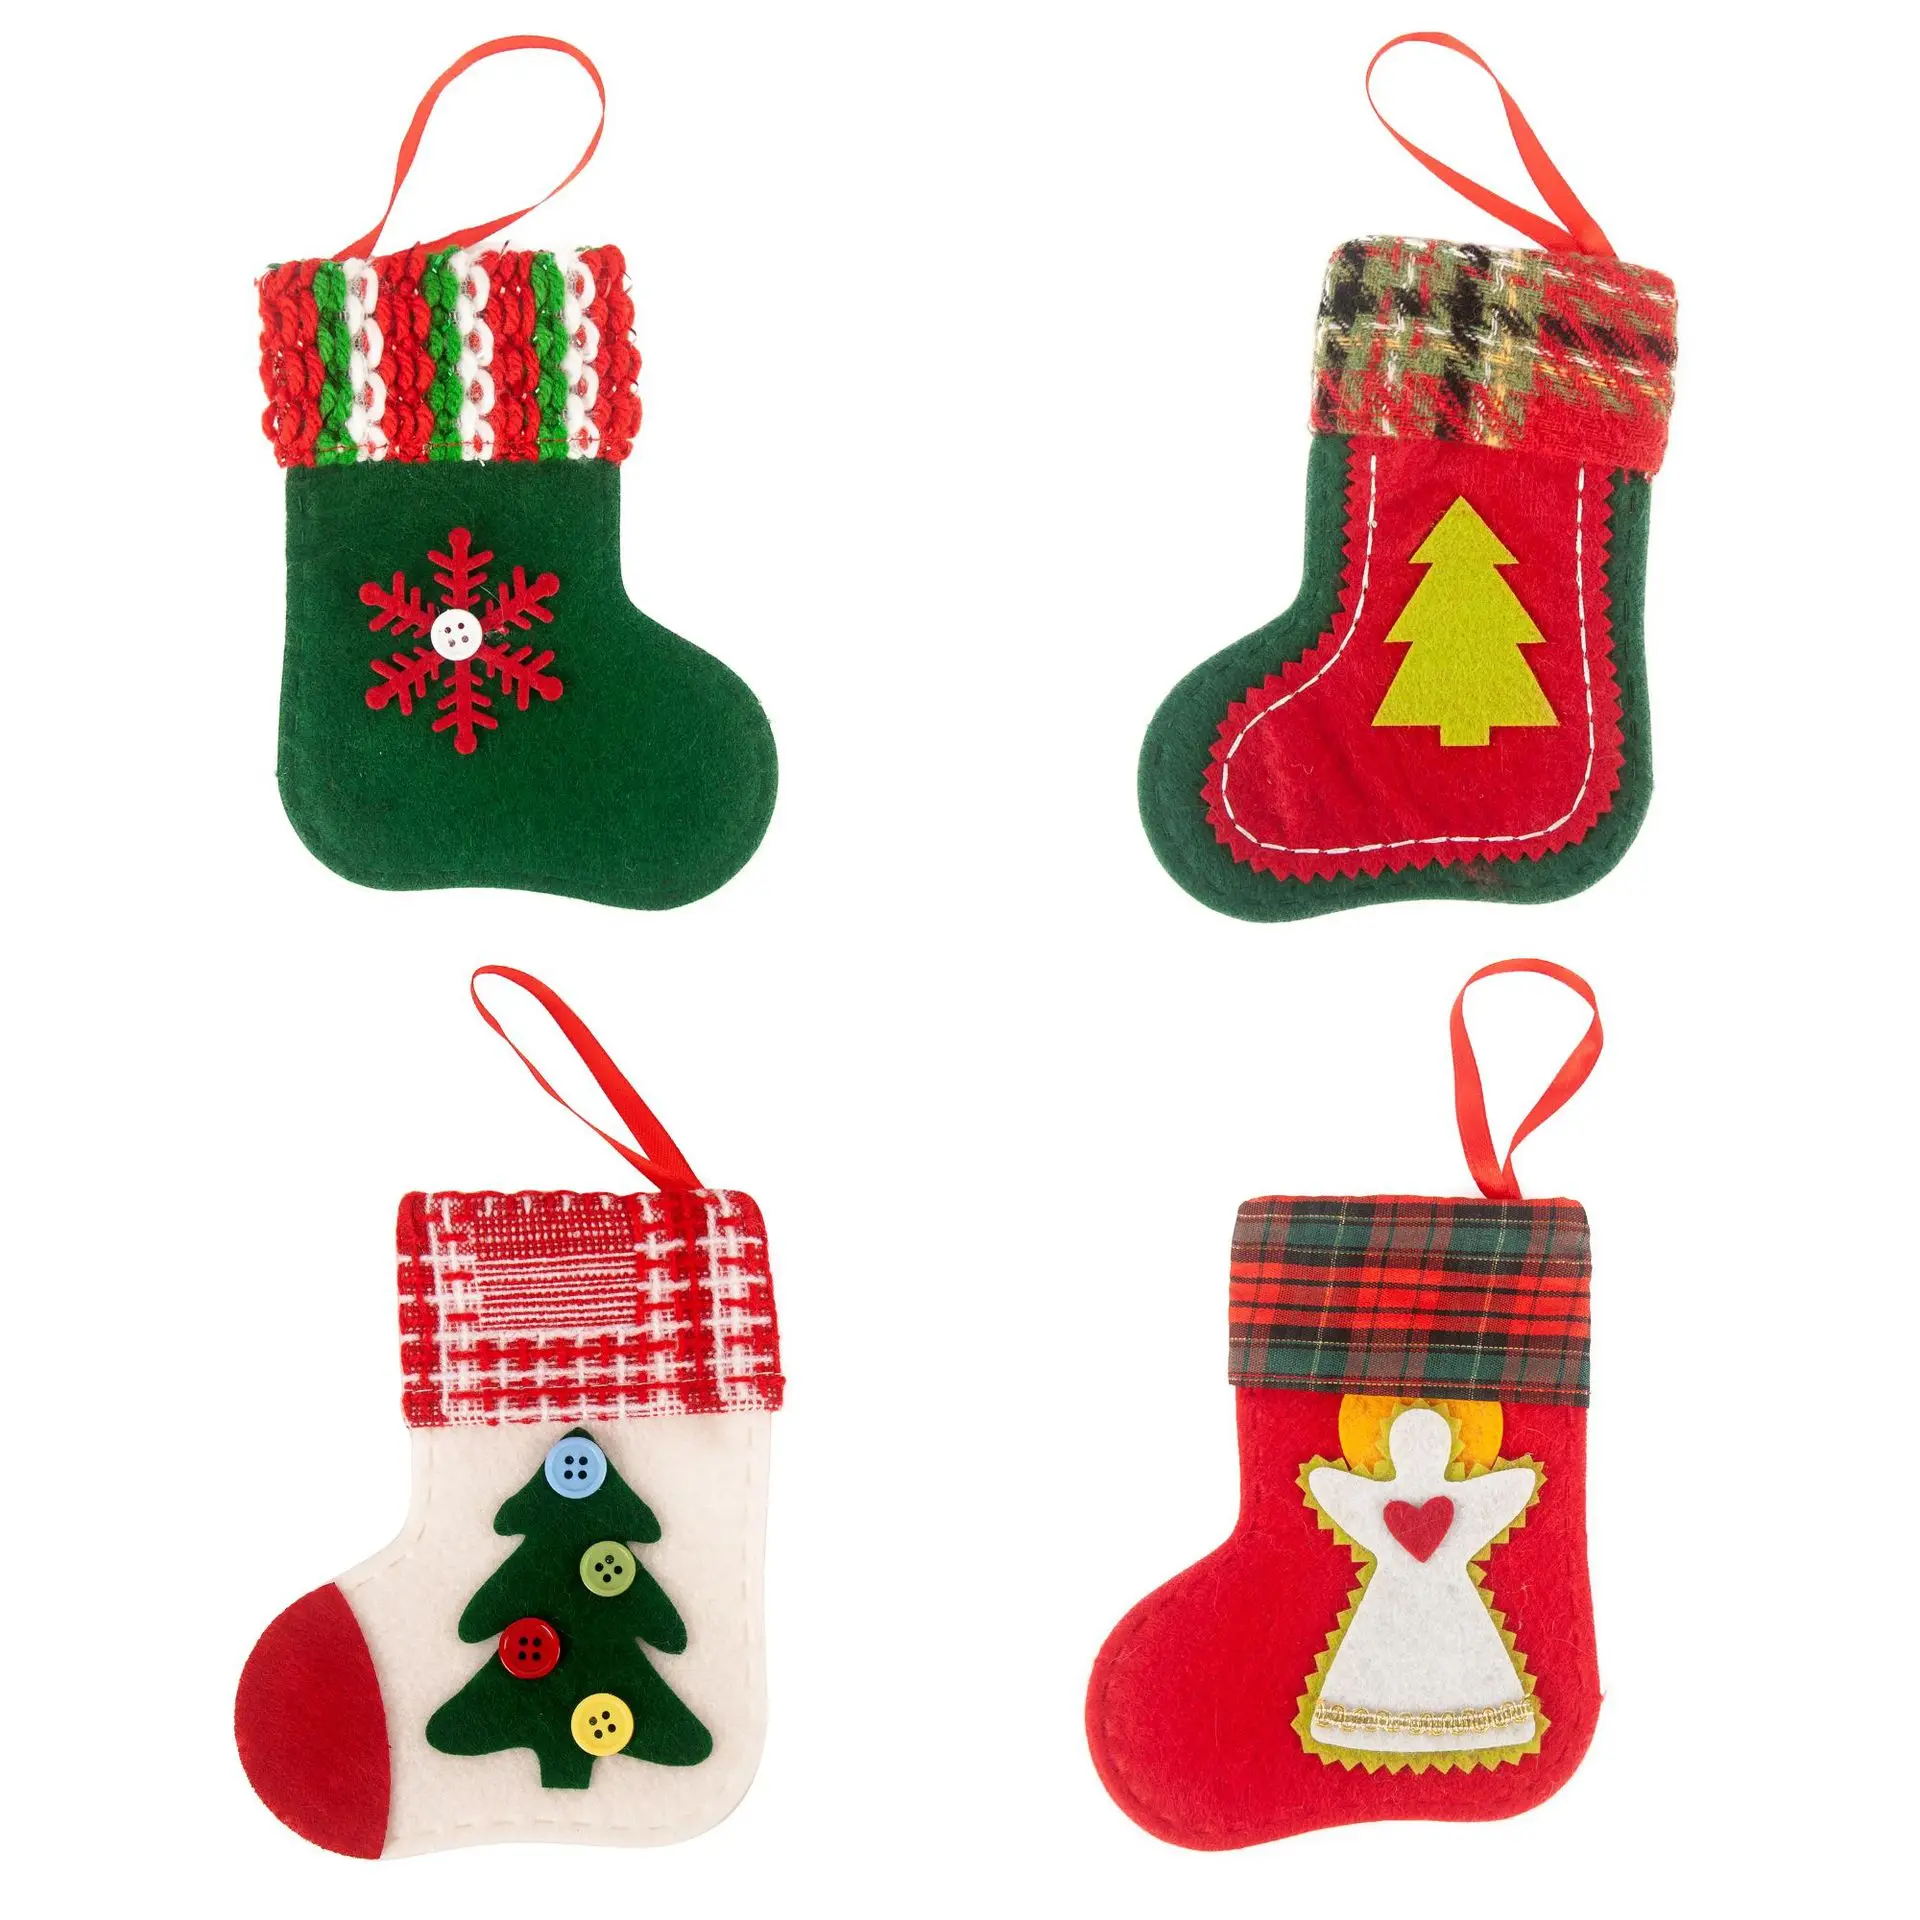 Creative fabric accessories Christmas tree ornament hanging pendants set